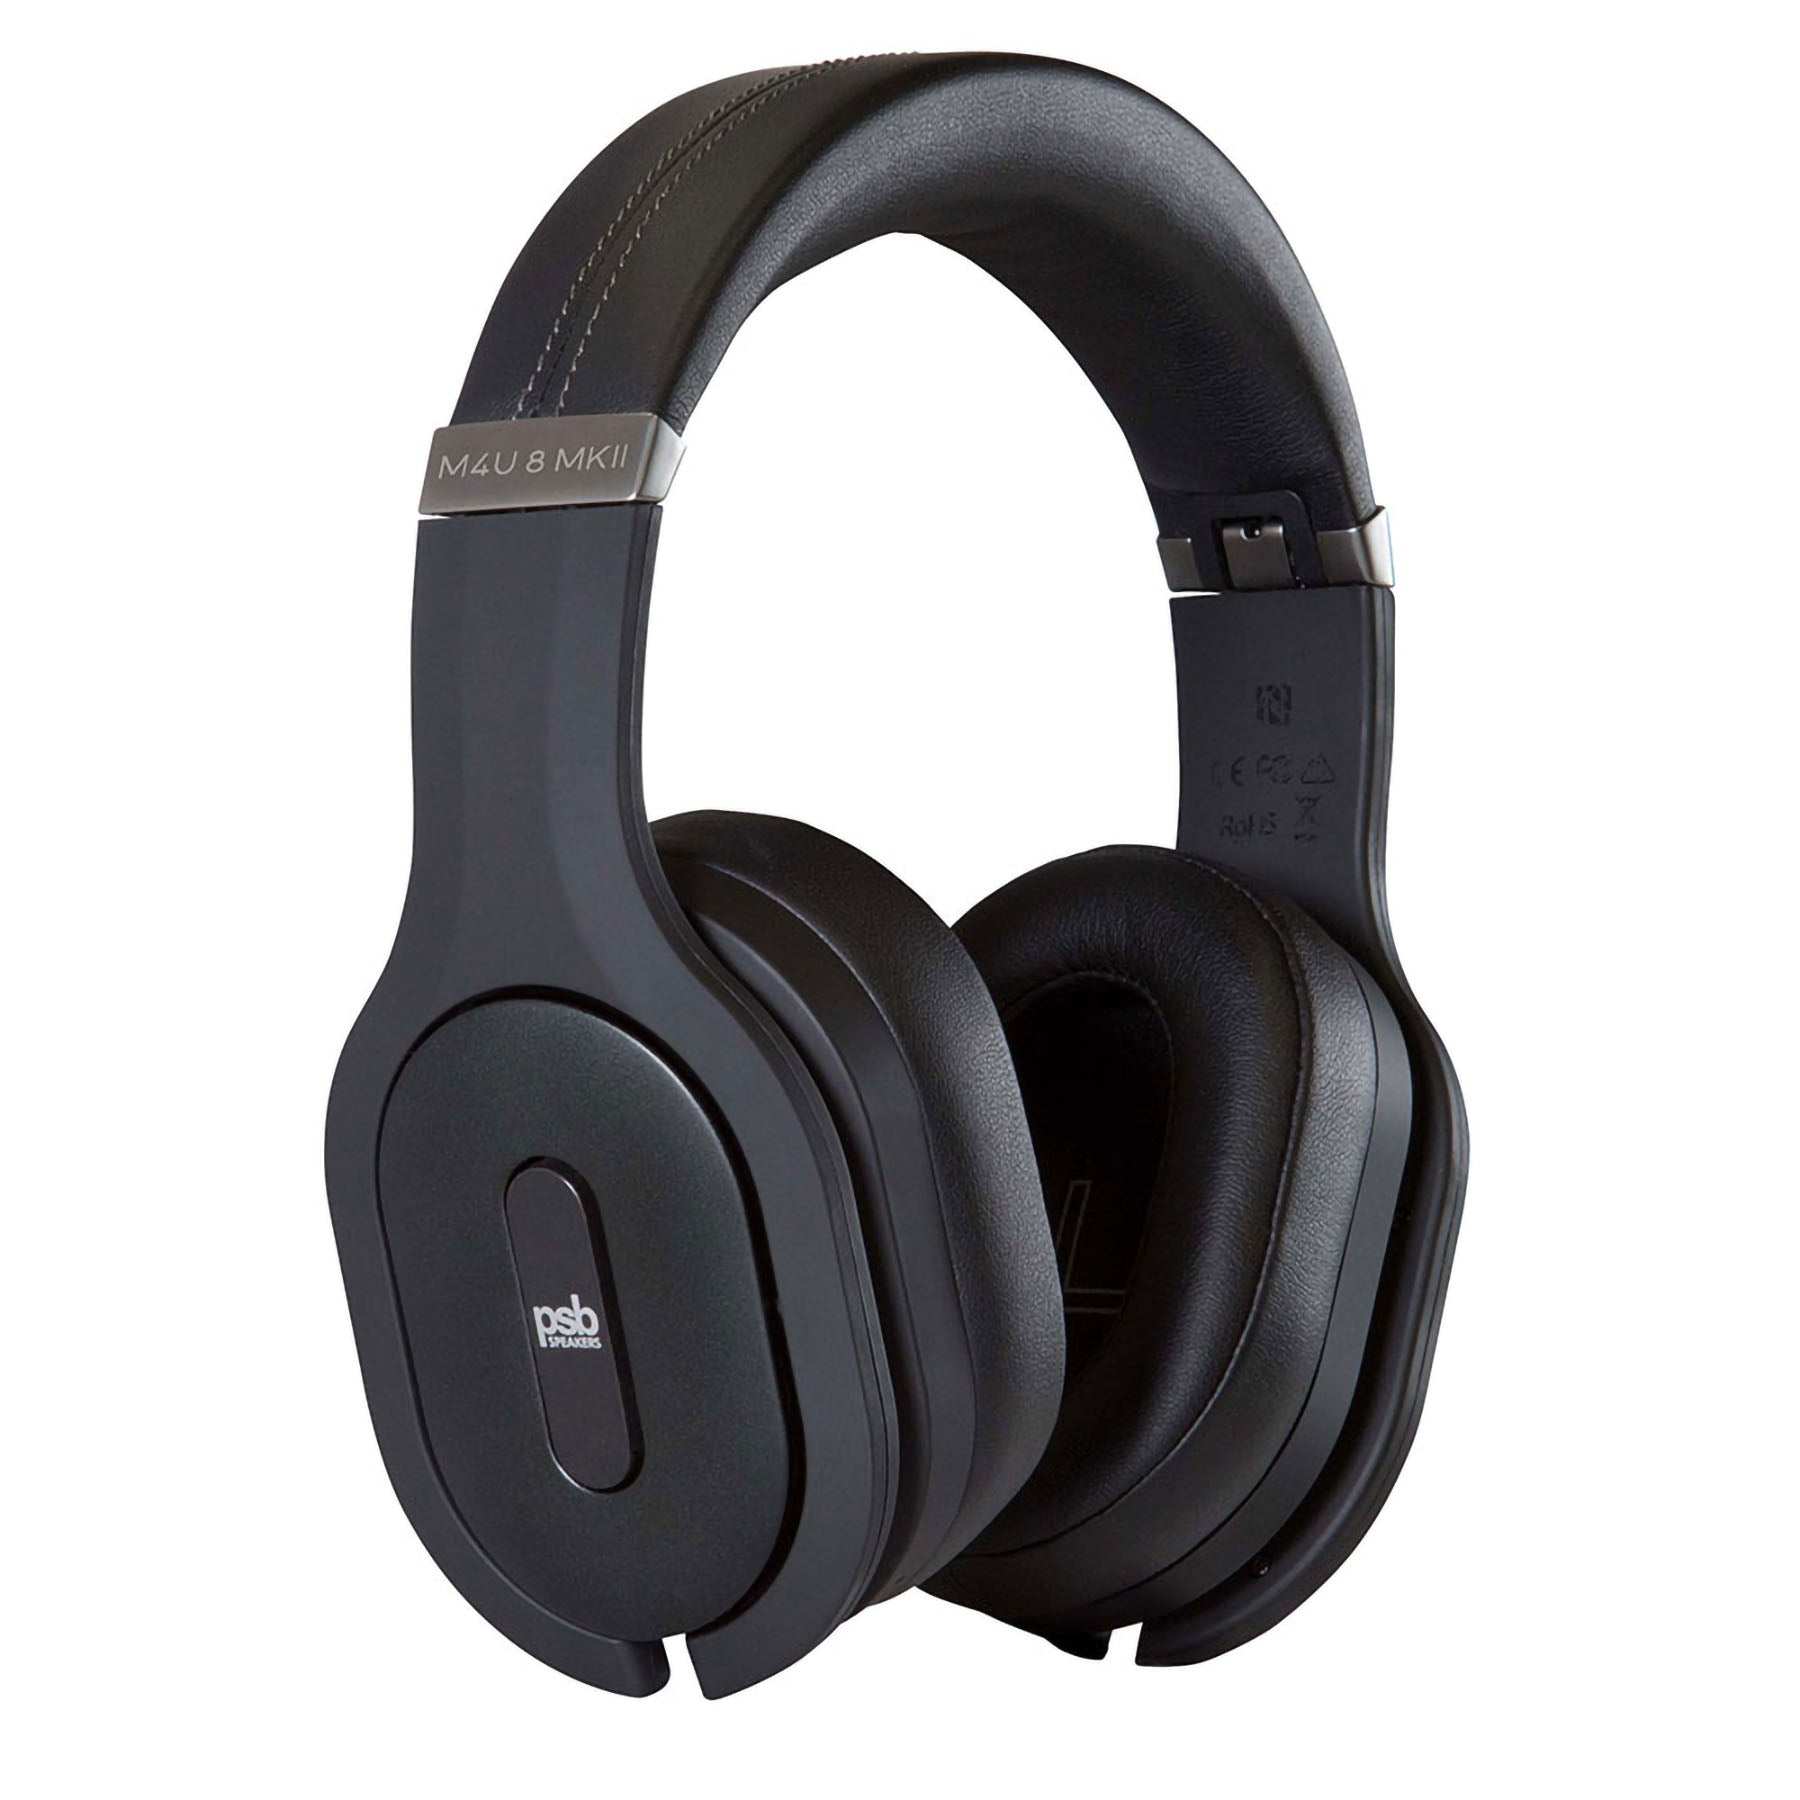 PSB M4U 8 MKII - Wireless Active Noise Cancelling Headphones